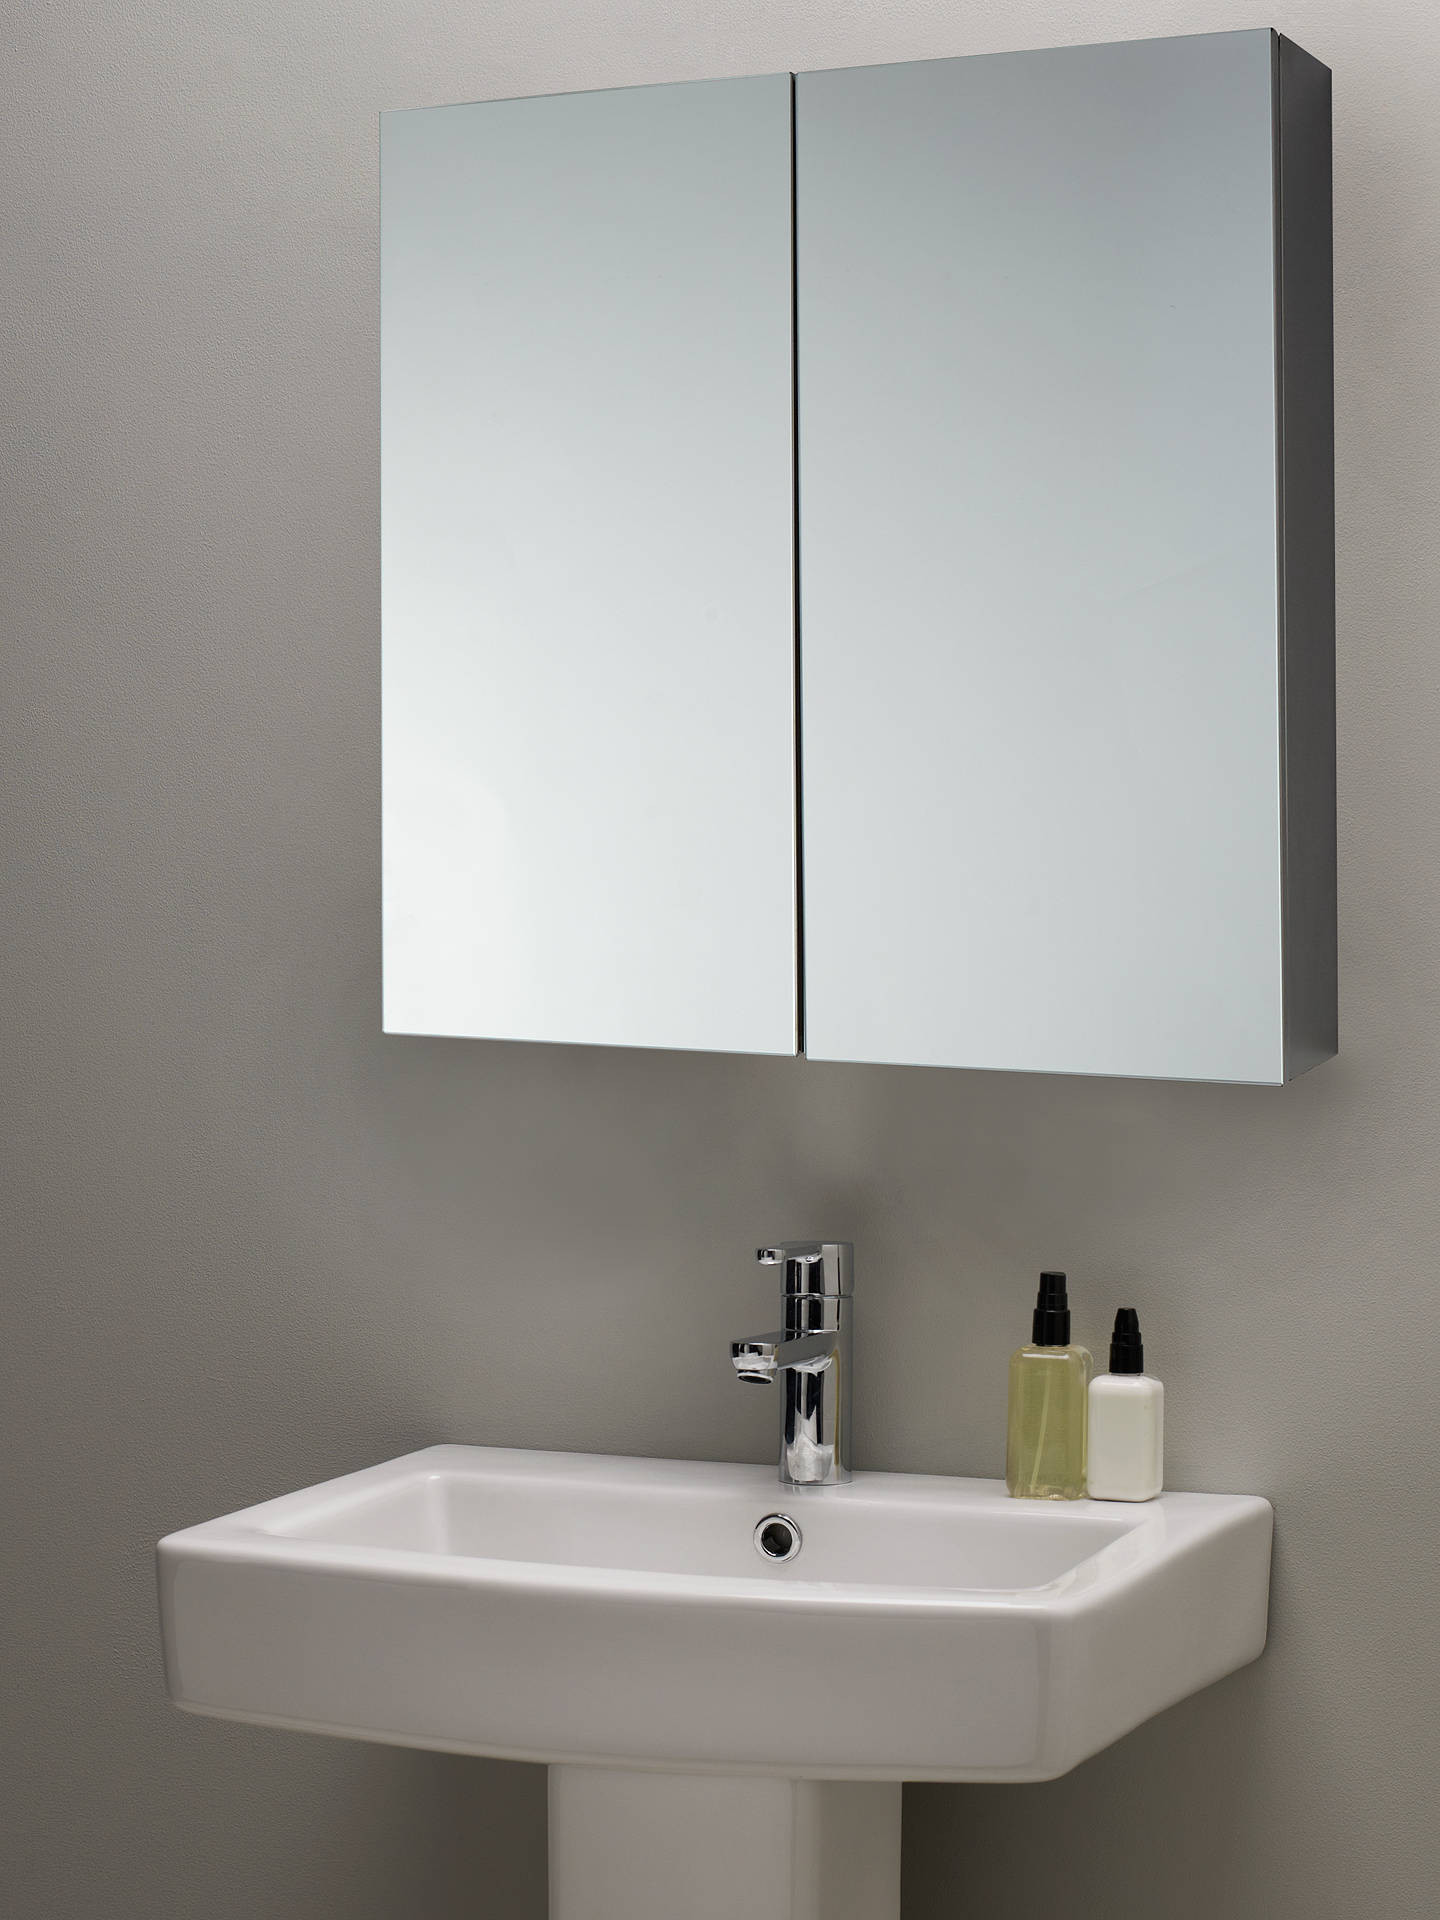 Mirror Cabinet Bathroom
 John Lewis & Partners Double Mirrored Bathroom Cabinet